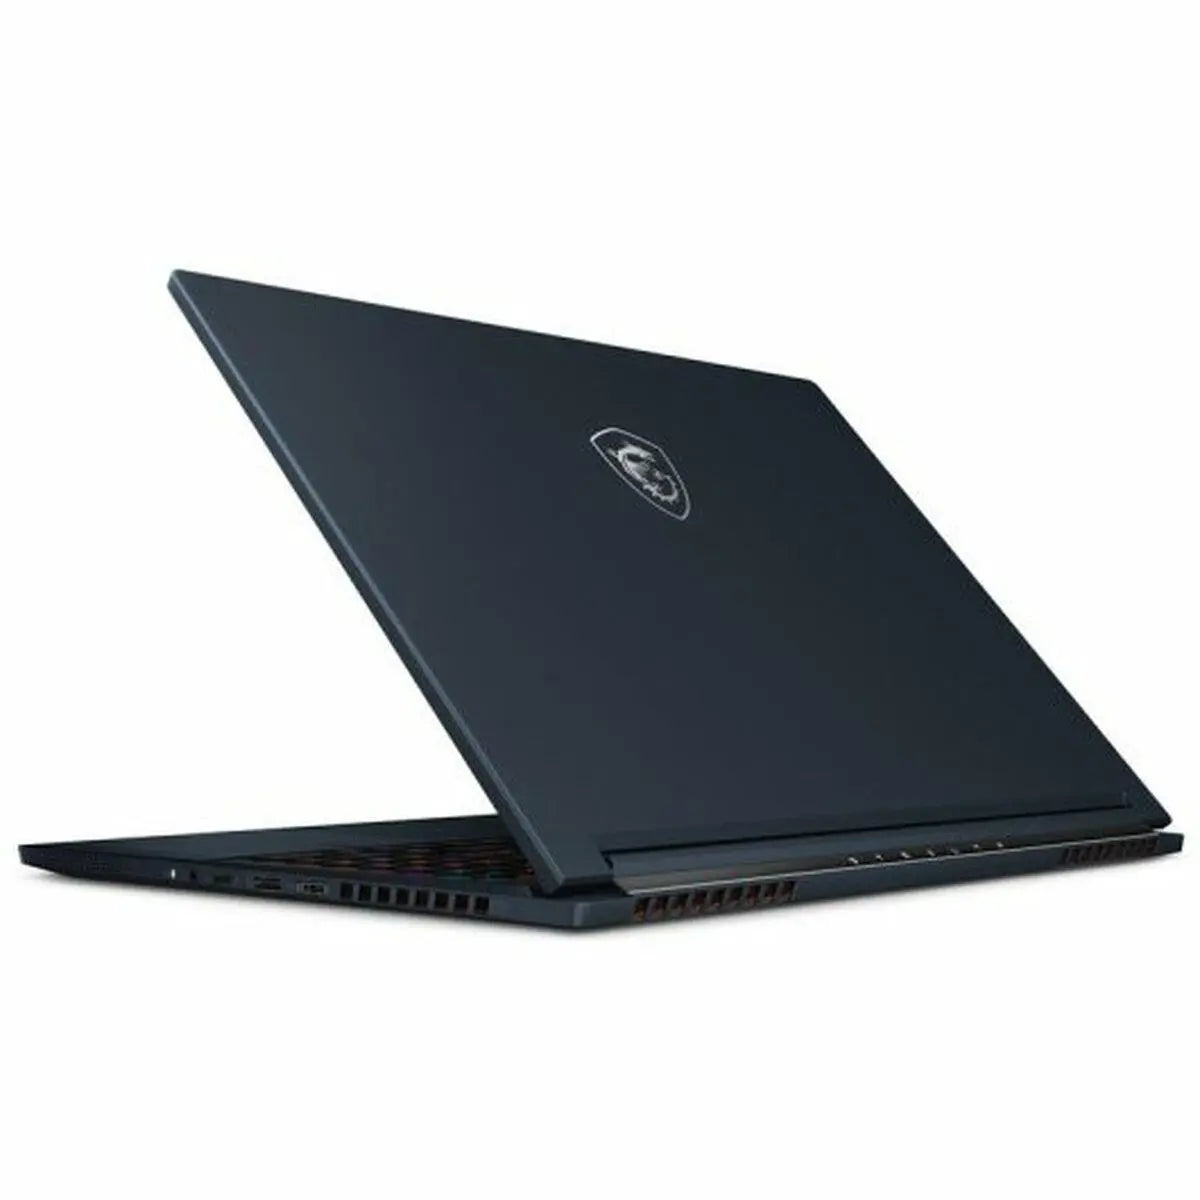 Laptop MSI 9S7-15F312-036 - IGSI Europe Ltd